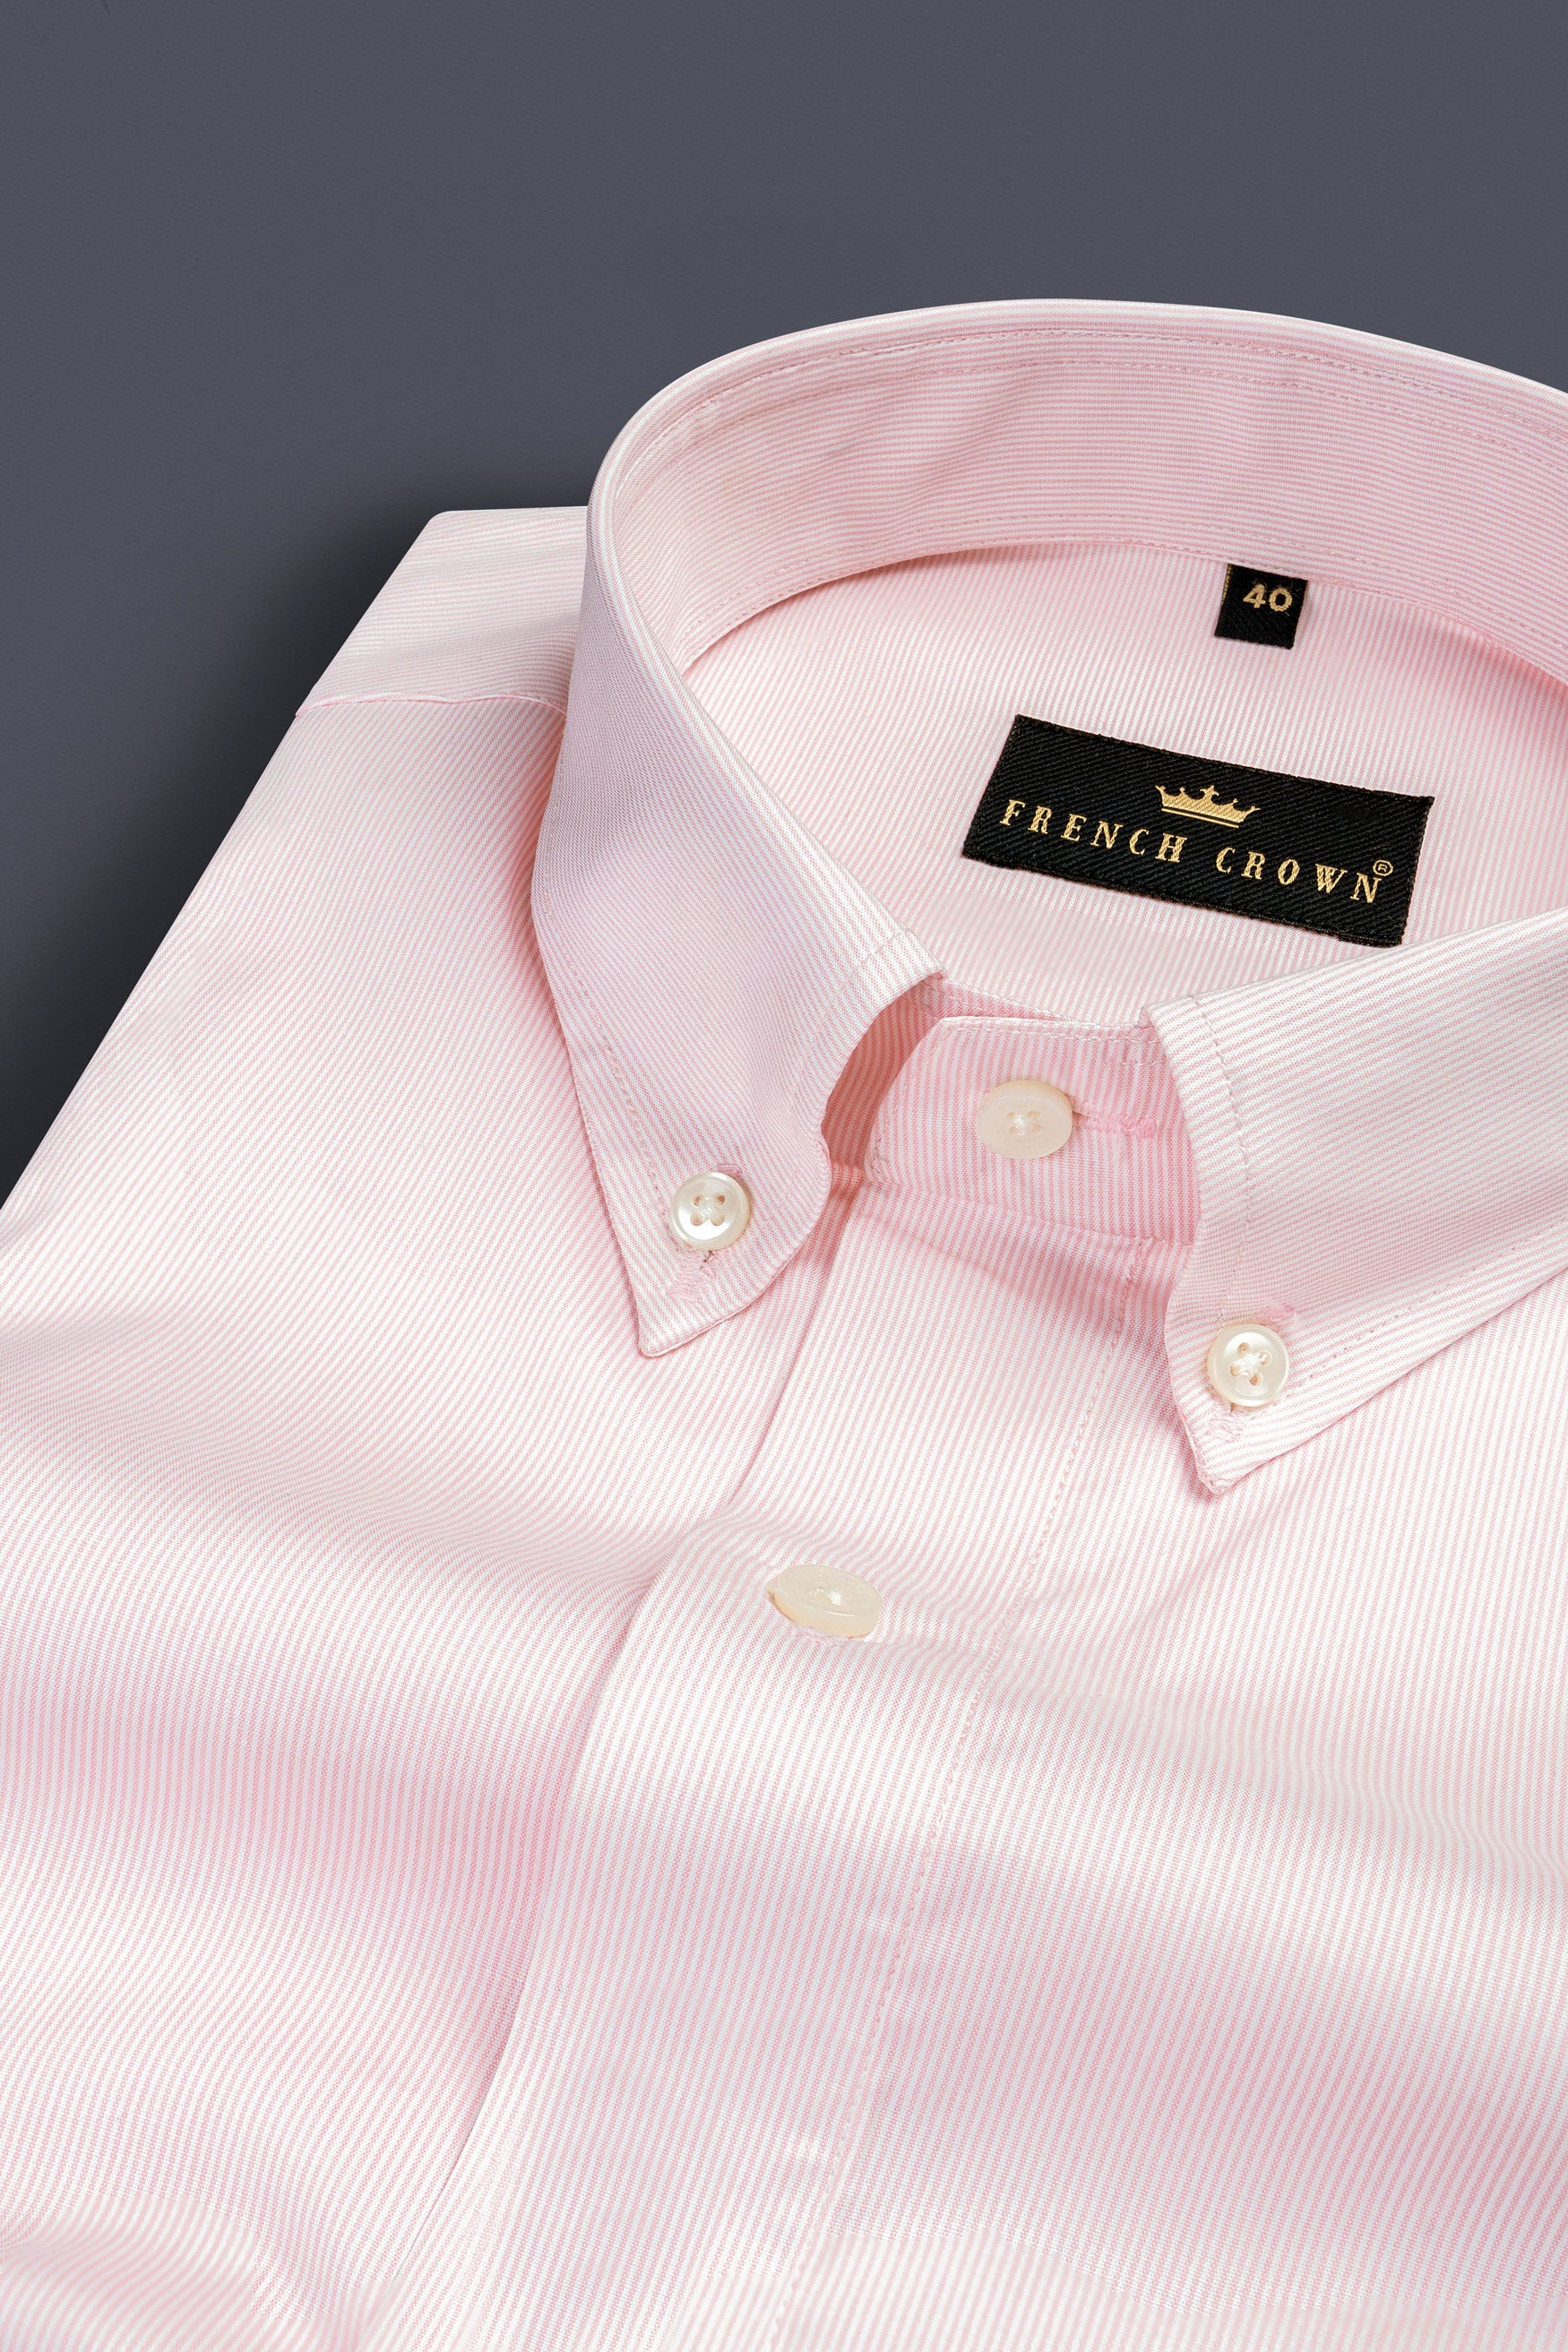 Pippin Pink Pin Striped Premium Cotton Shirt